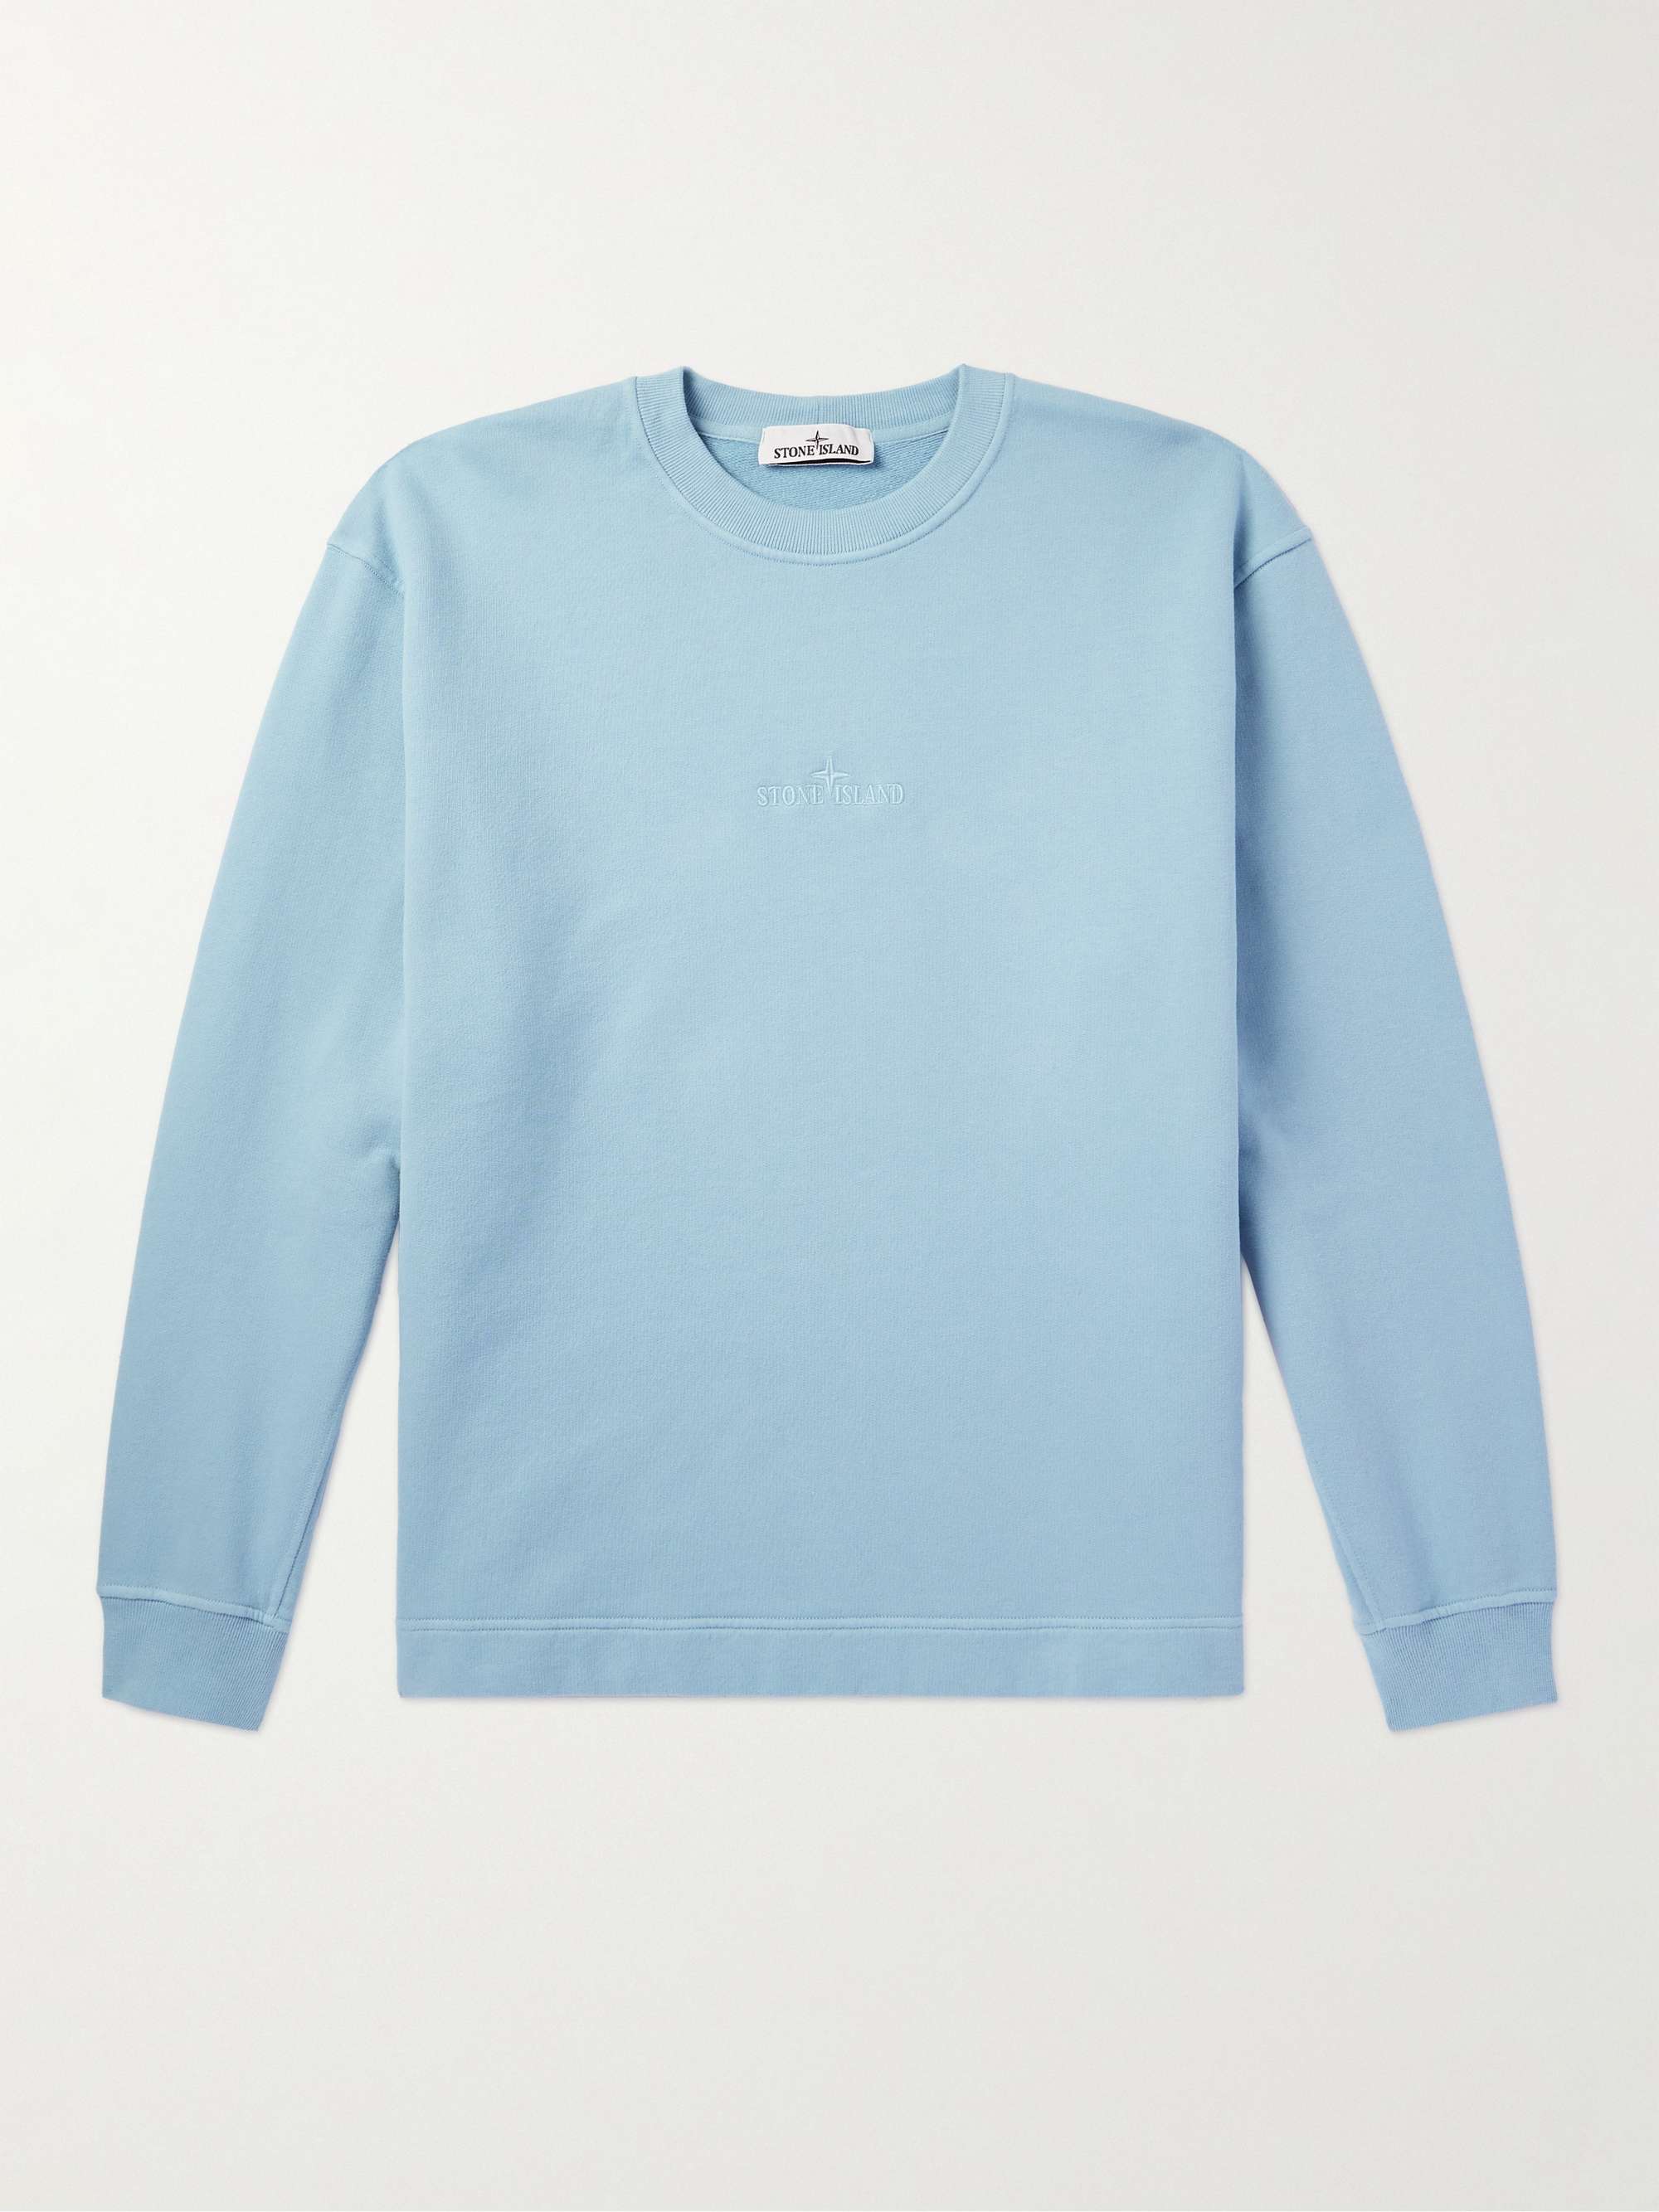 STONE ISLAND Logo-Embroidered Cotton-Jersey Sweatshirt for Men | MR PORTER